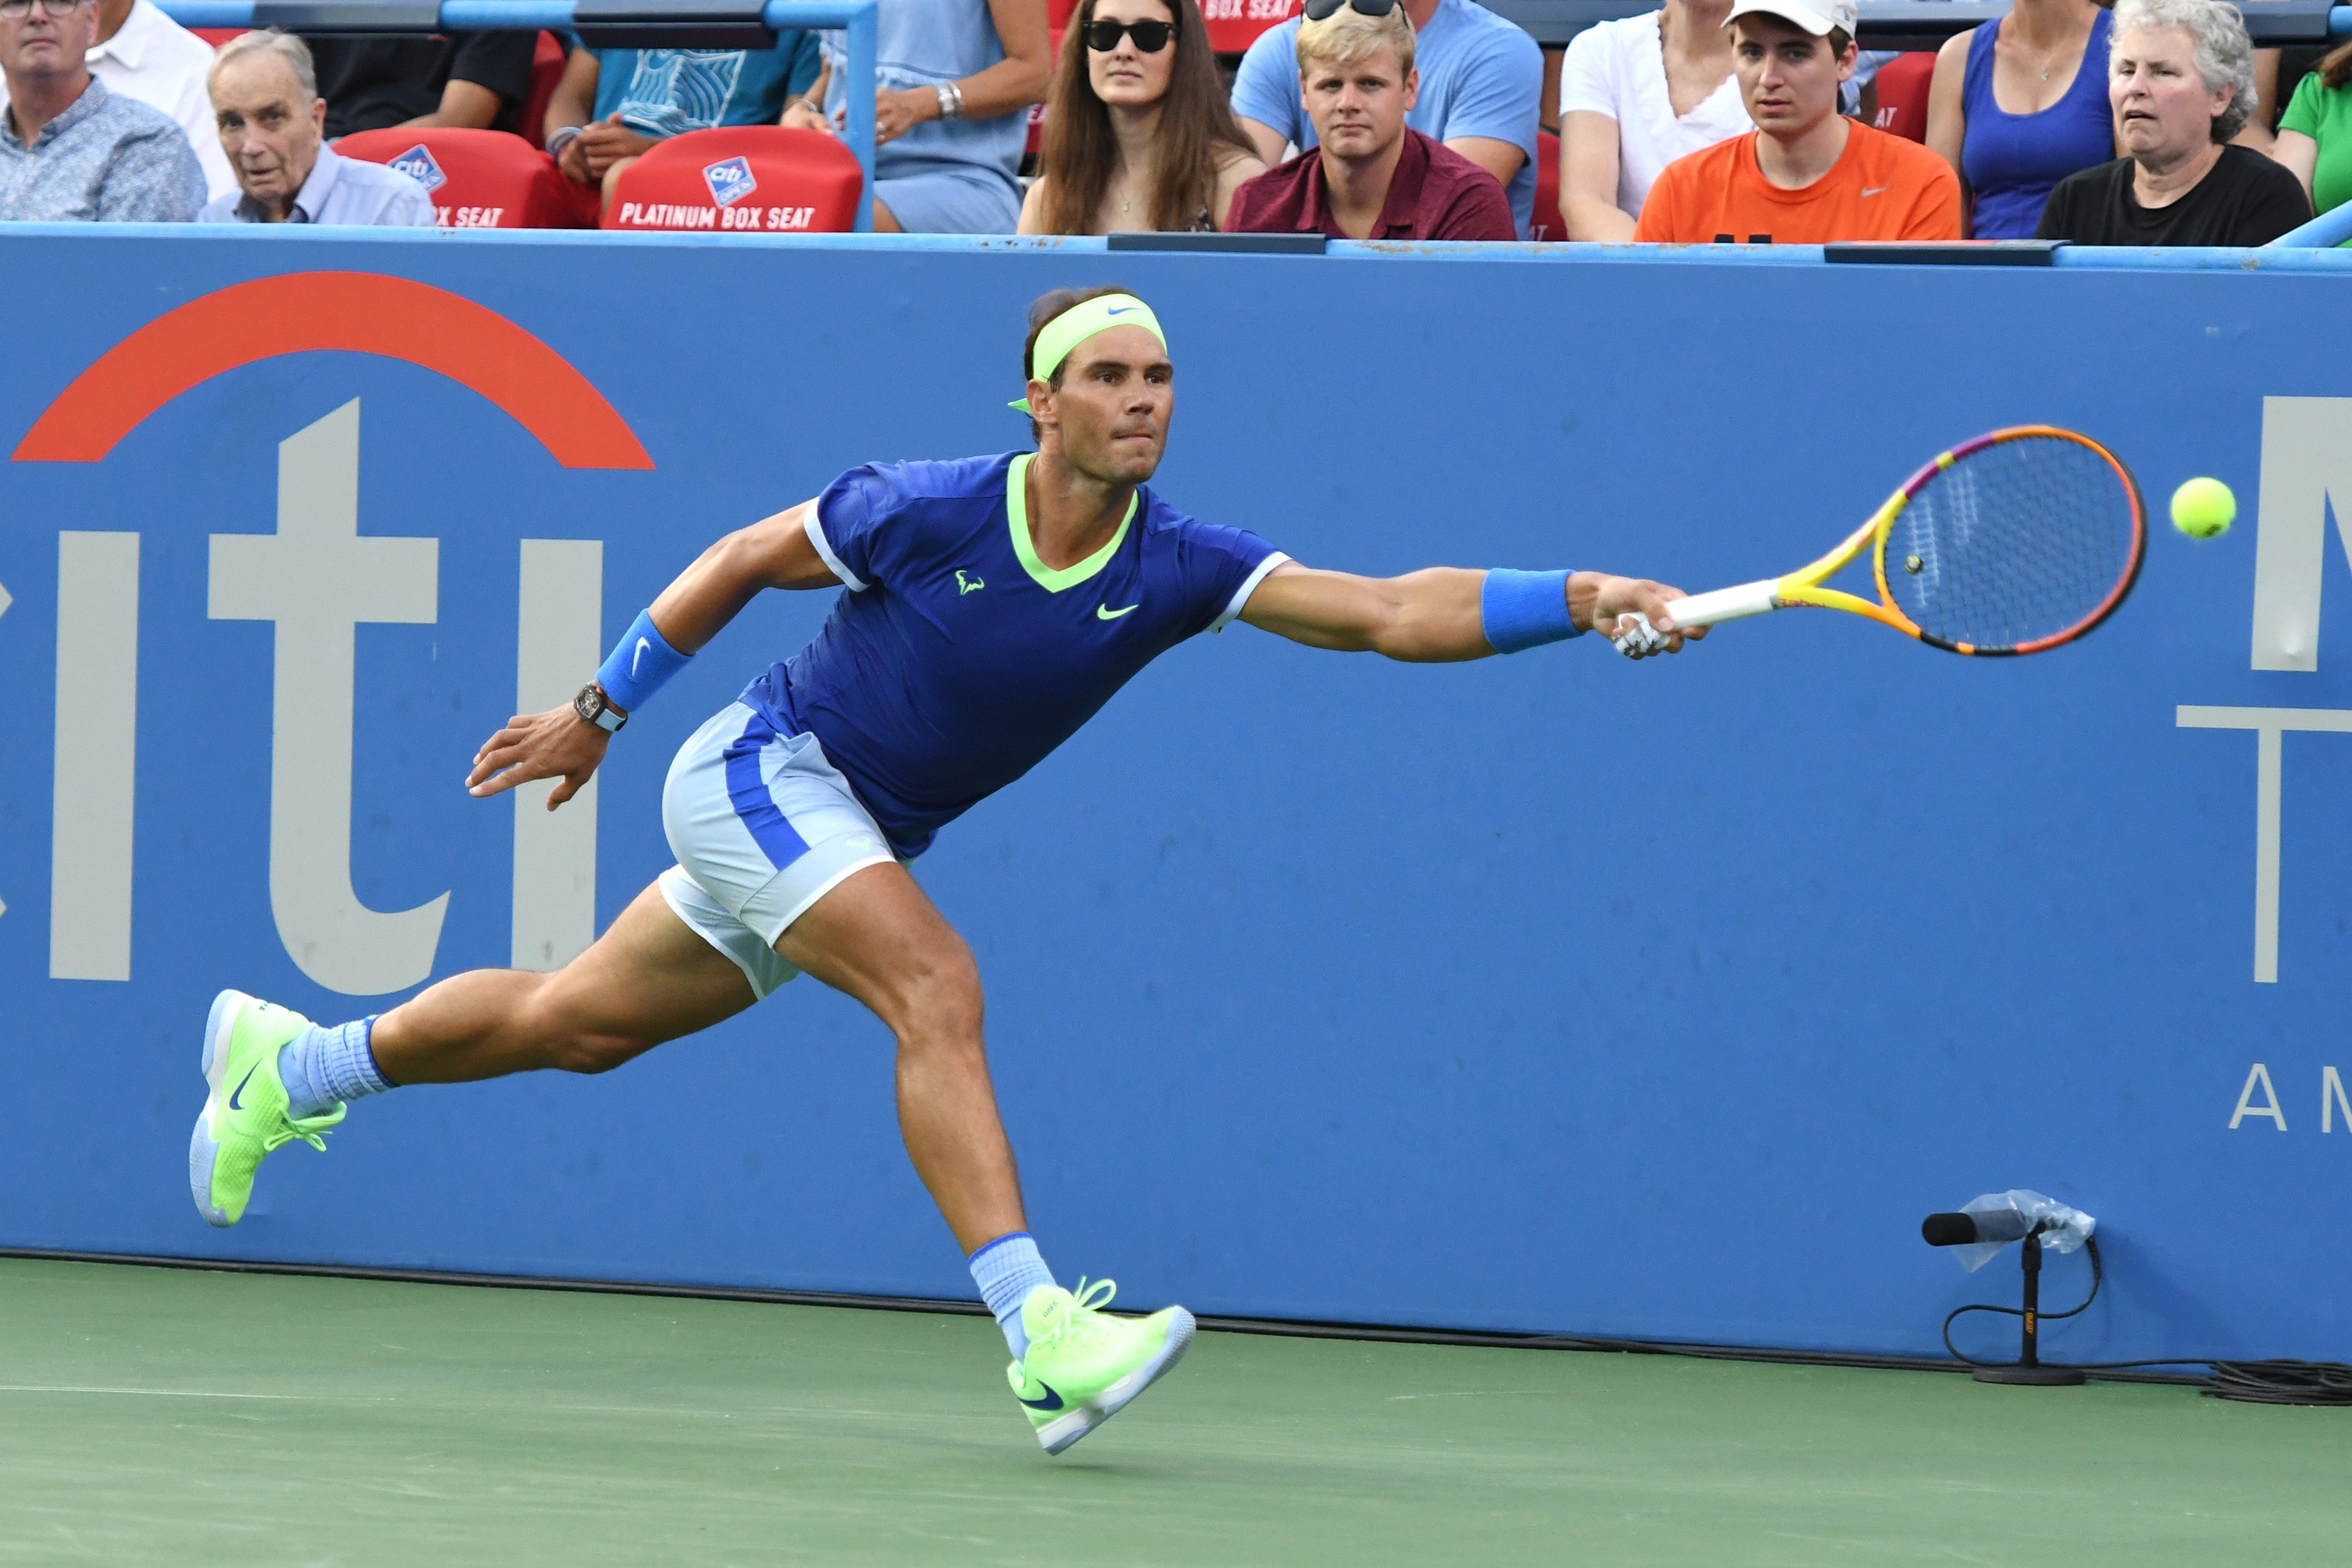 Encouraged by Citi Open progress, Rafael Nadal plans full slate of summer tournaments